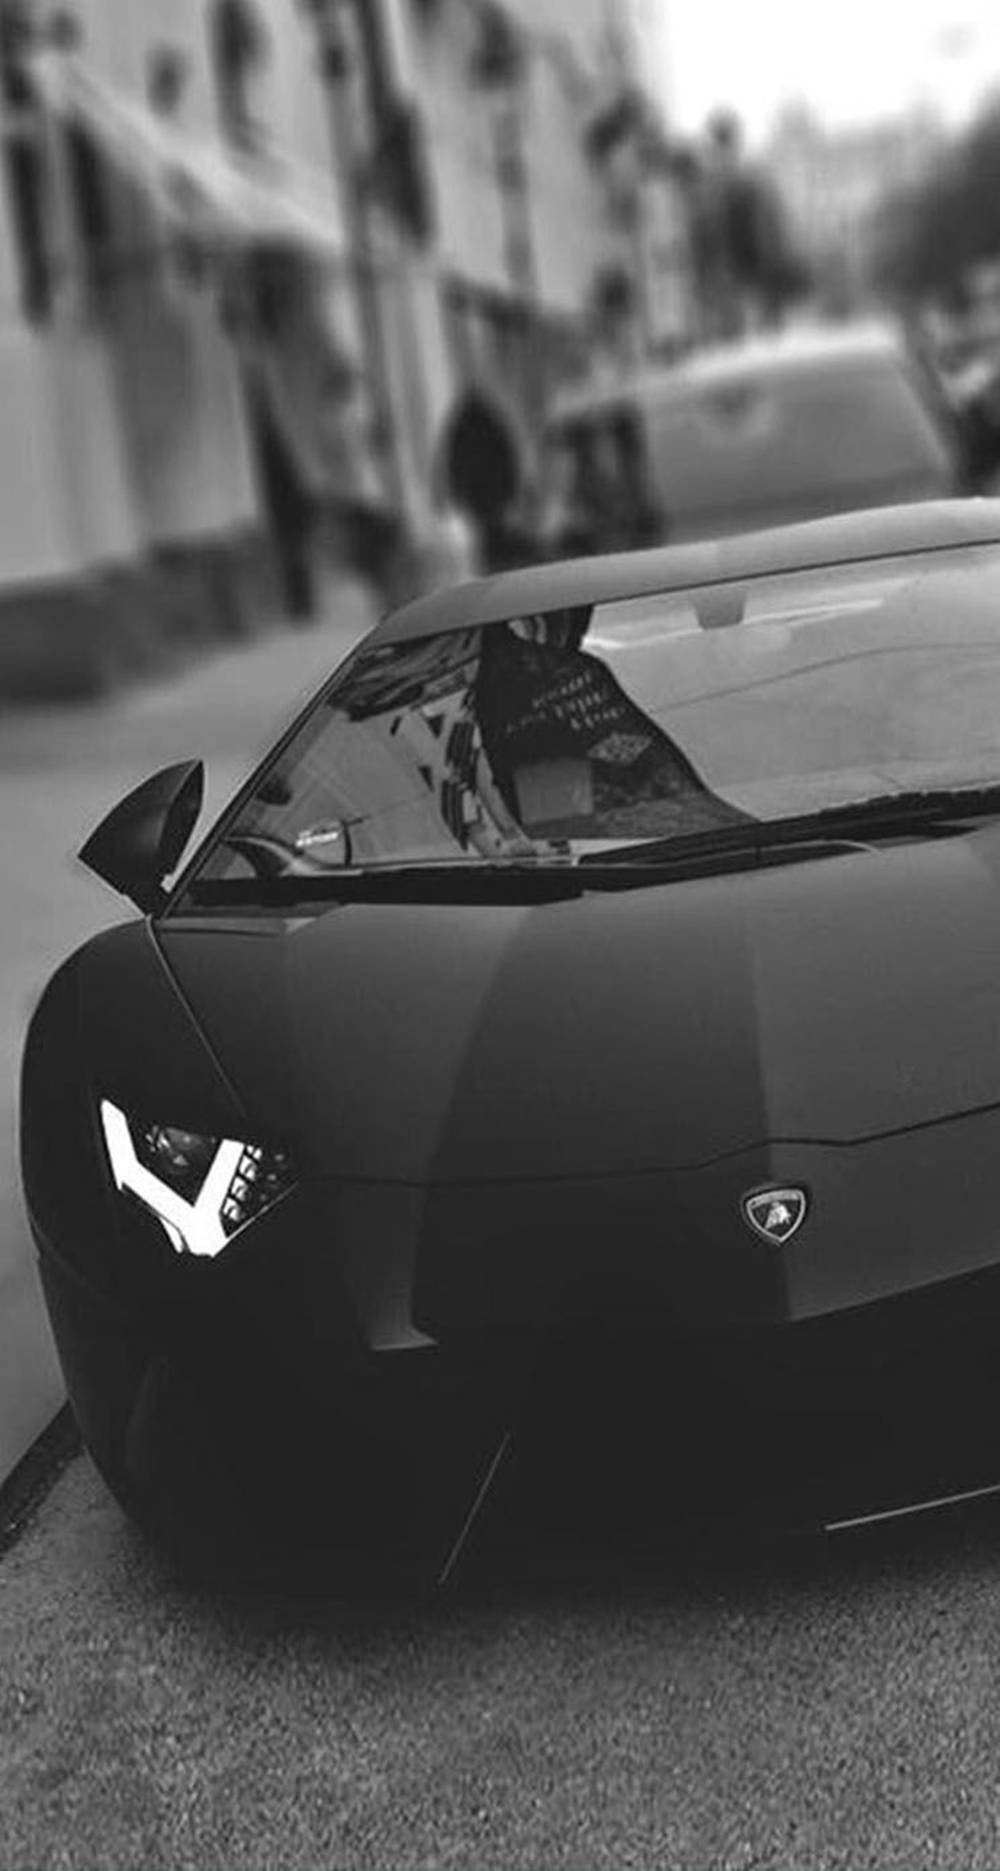 Stunning Iphone Lamborghini Display Background